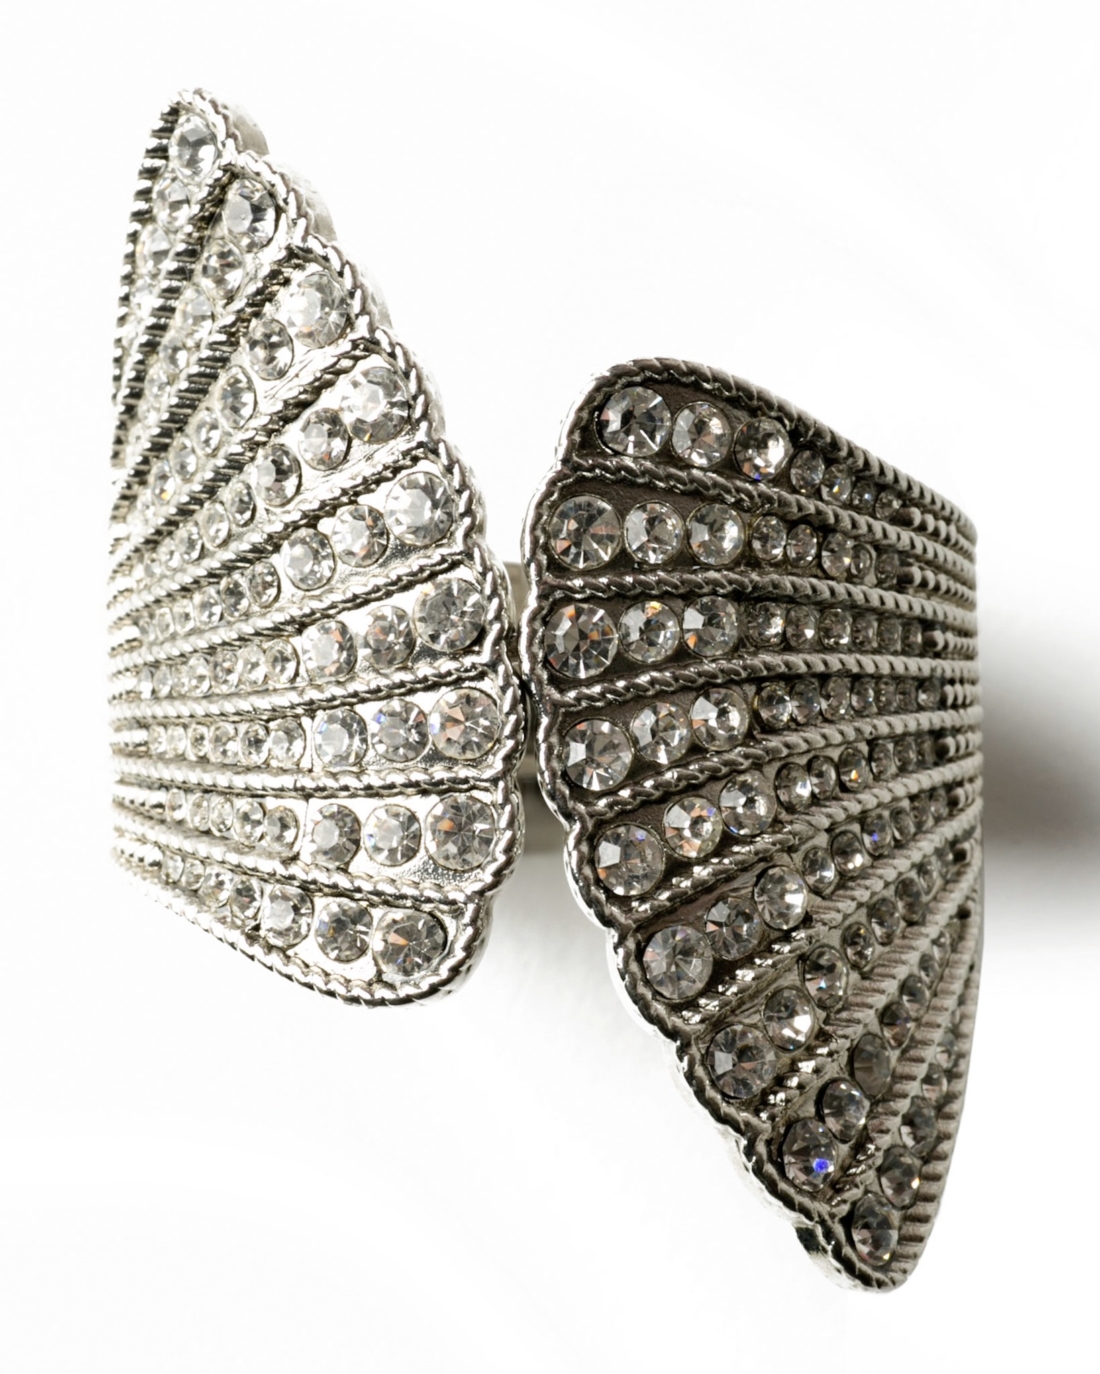 Sparkling Crystal Angel Wing Cuff Bracelet, circa 1950’s